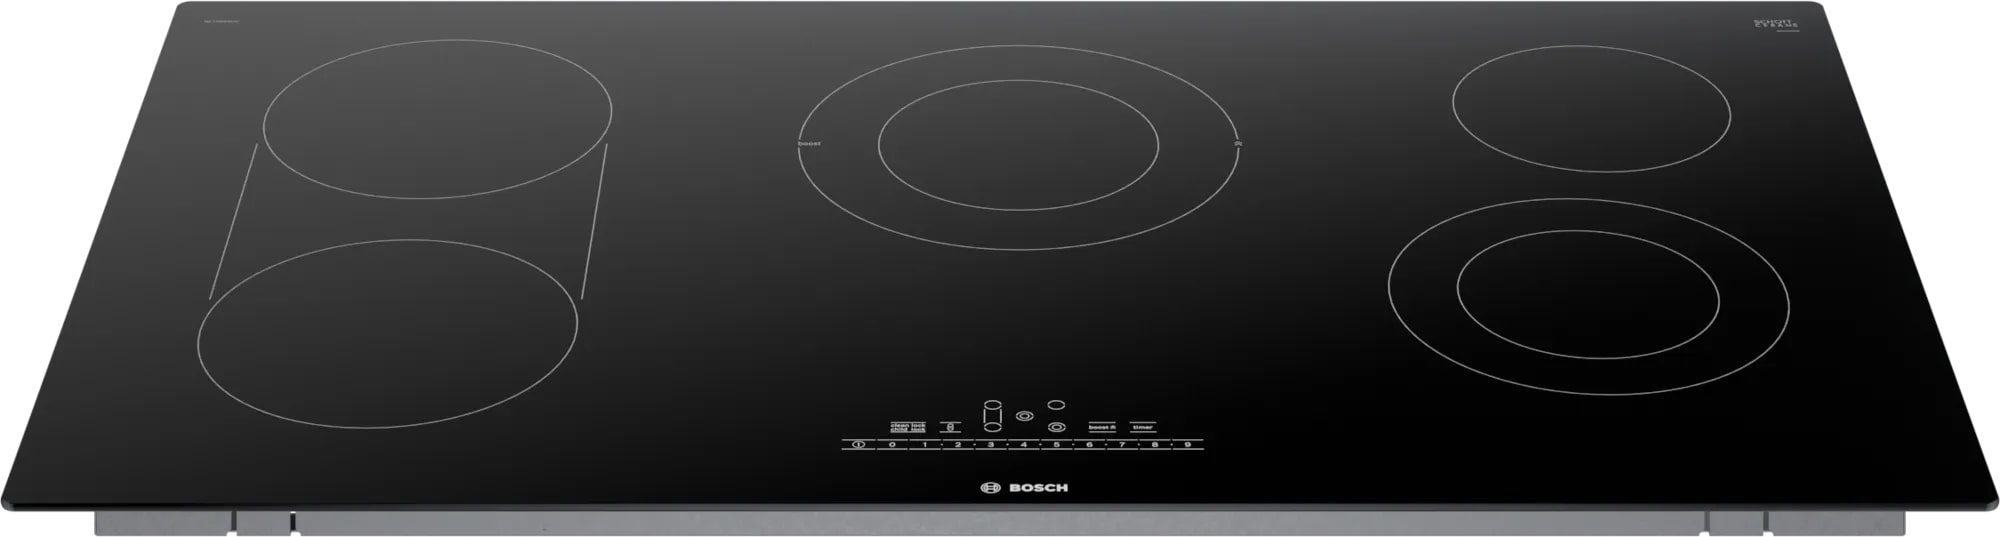 Bosch - 37 inch wide Electric Cooktop in Black - NET8669UC